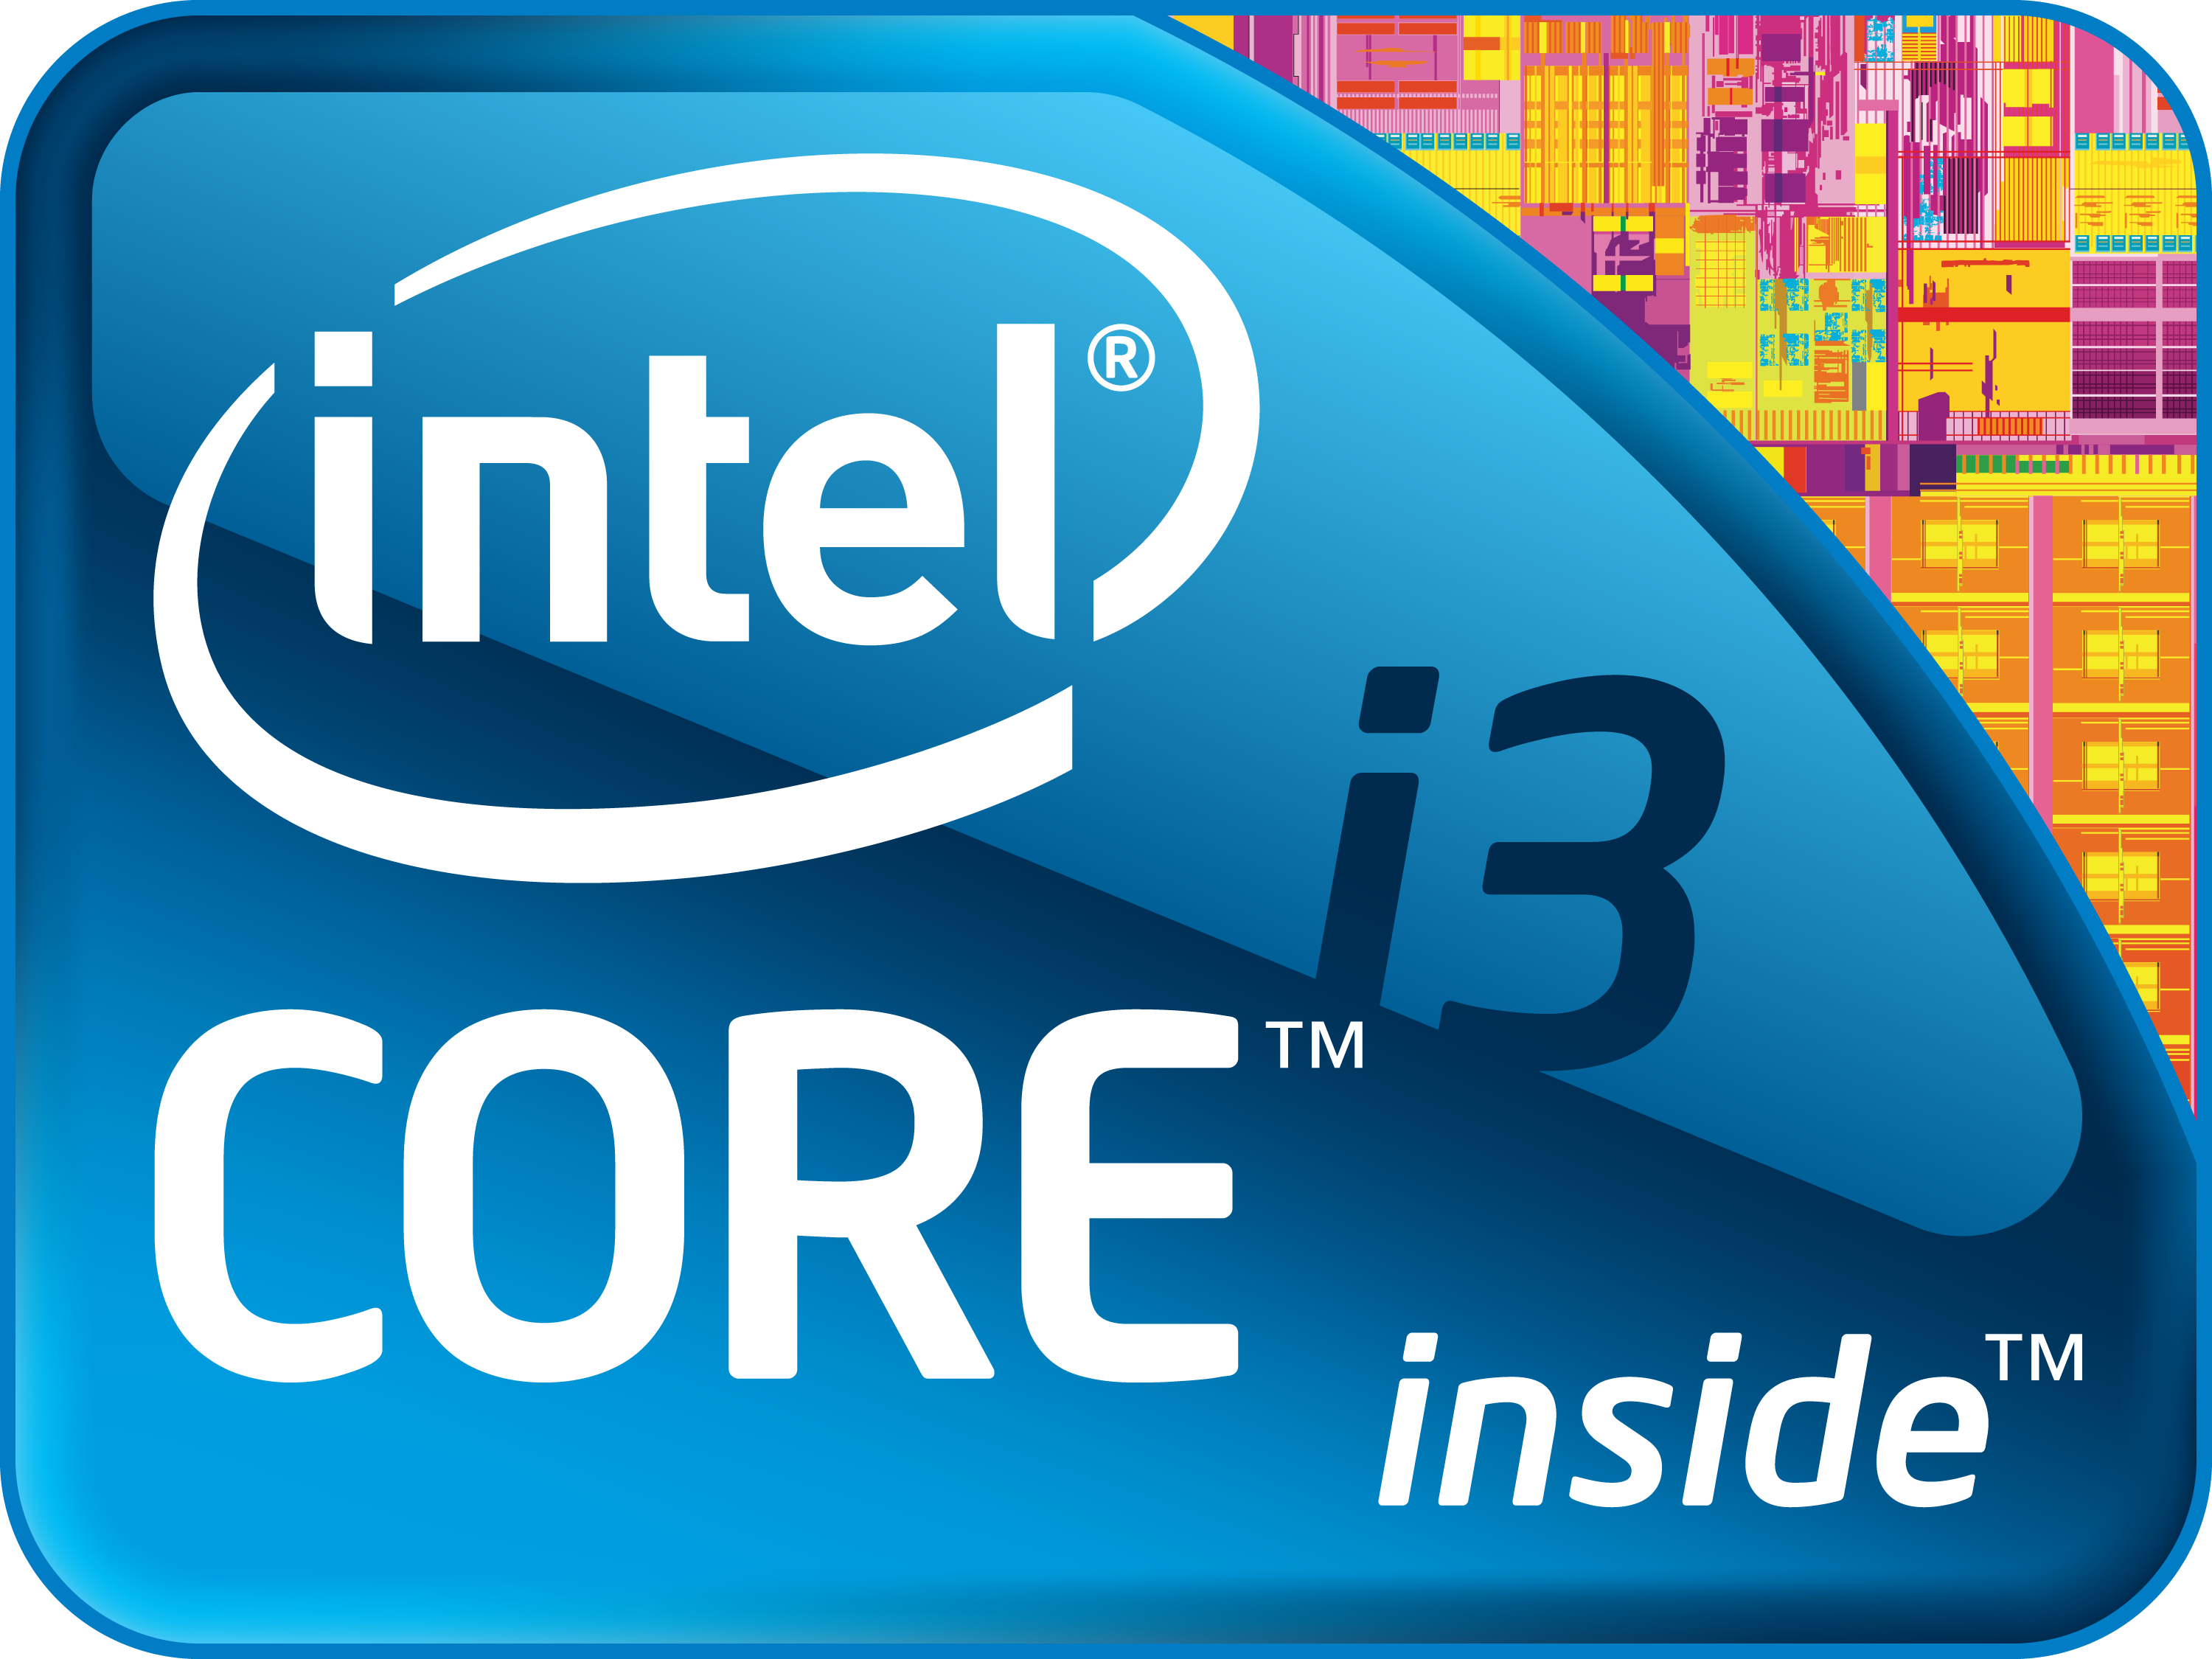 Intel sde. Intel Core i3 logo. Intel Core i5 логотип. Значок Intel Core i5. Intel Core i3 обои.